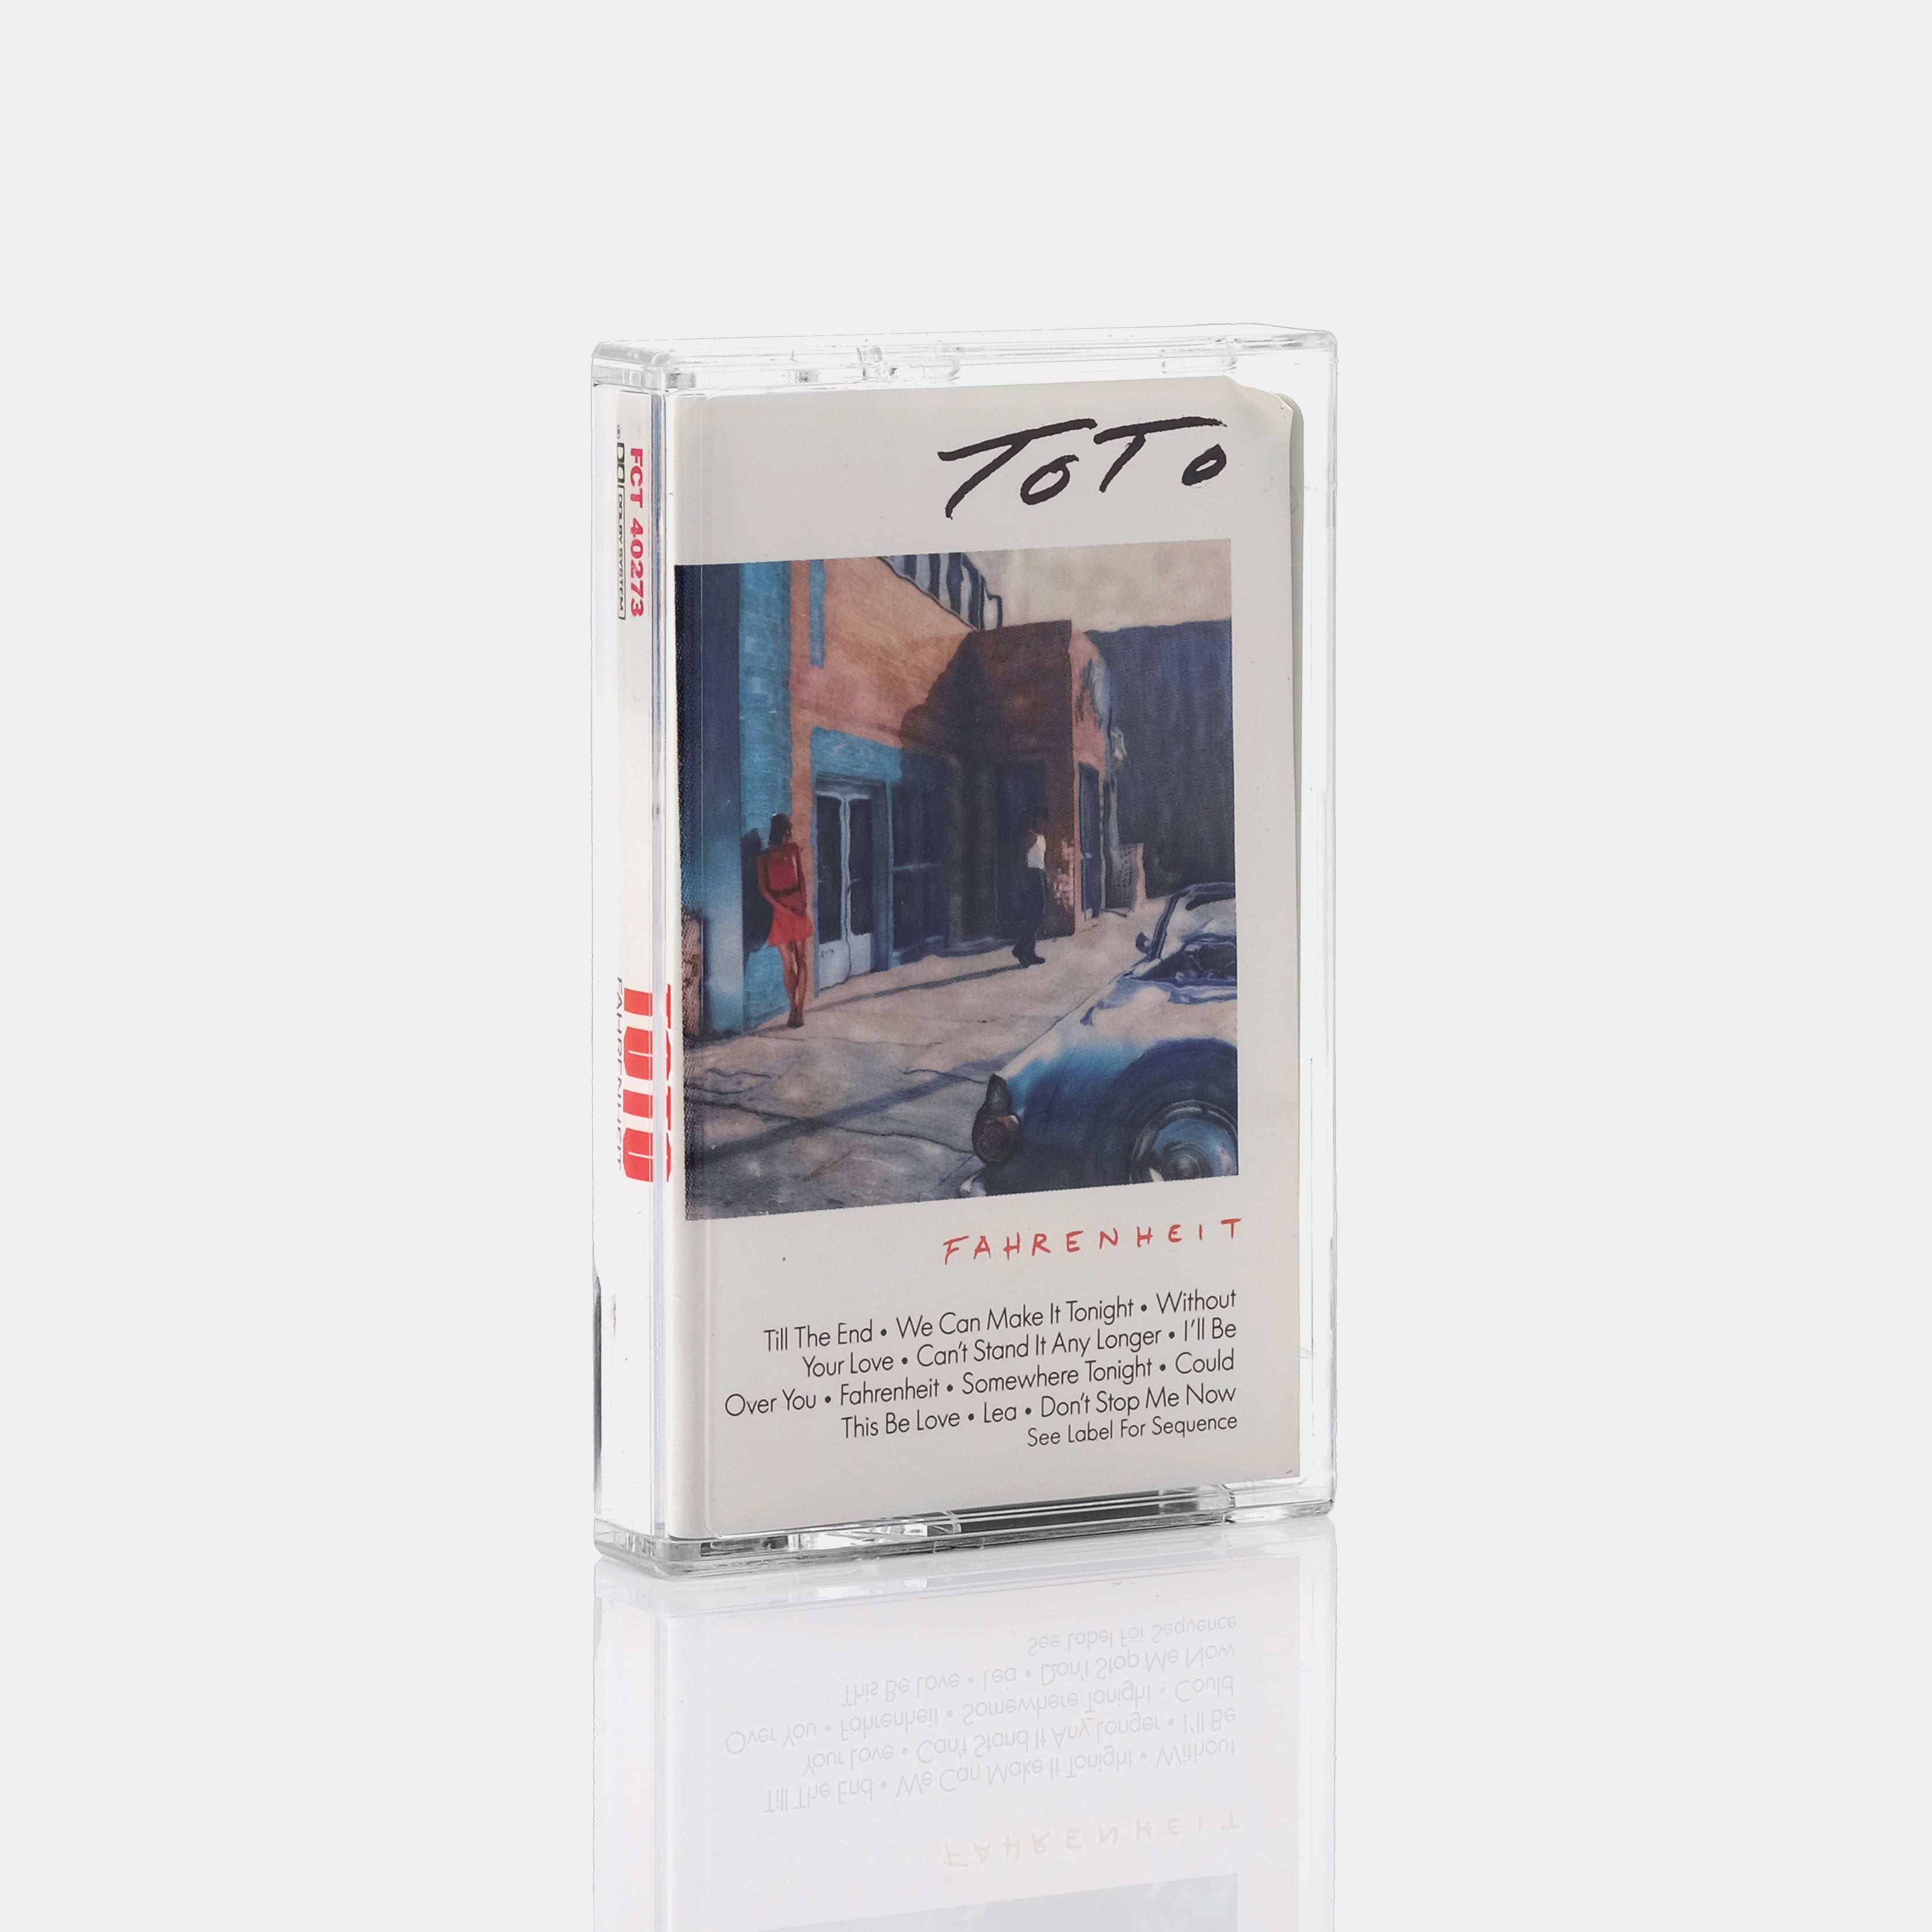 TOTO - Fahrenheit Cassette Tape